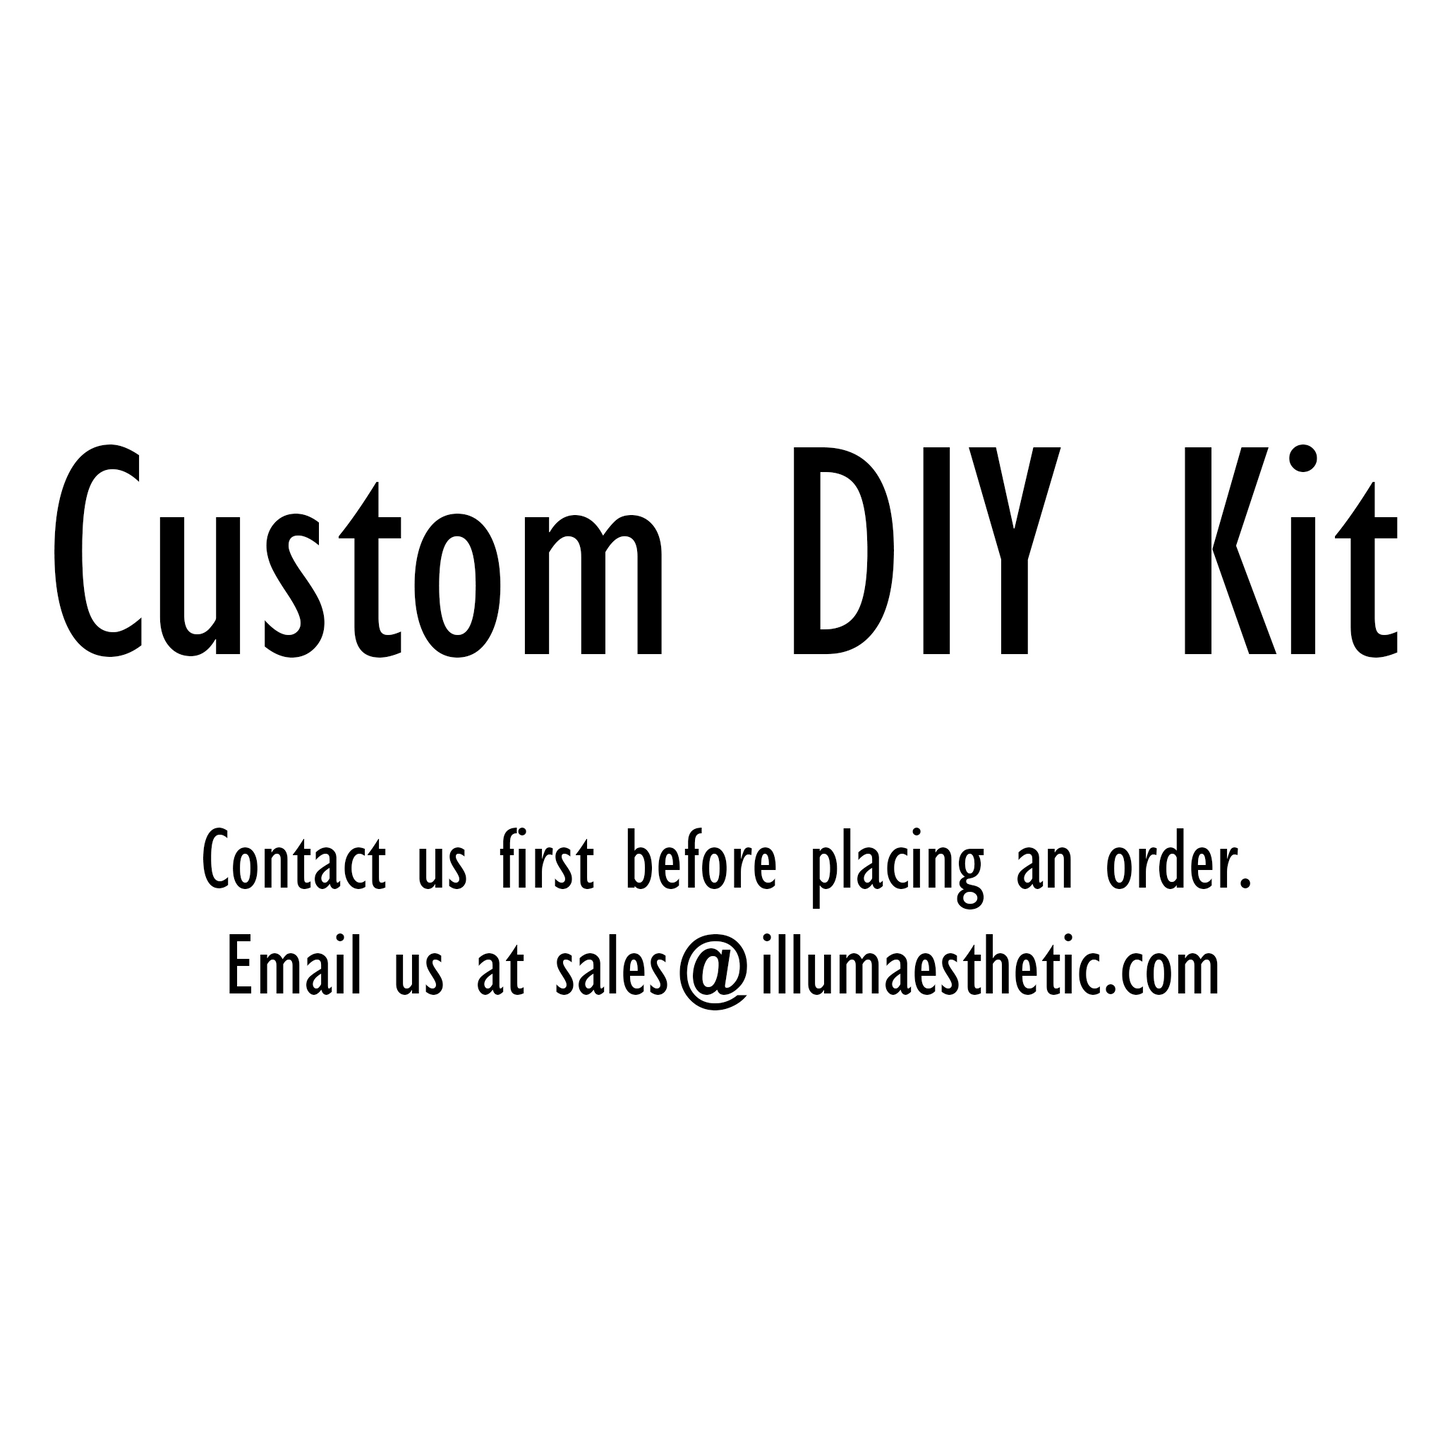 Subaru Alcyone (SVX) - Complete DIY Kit